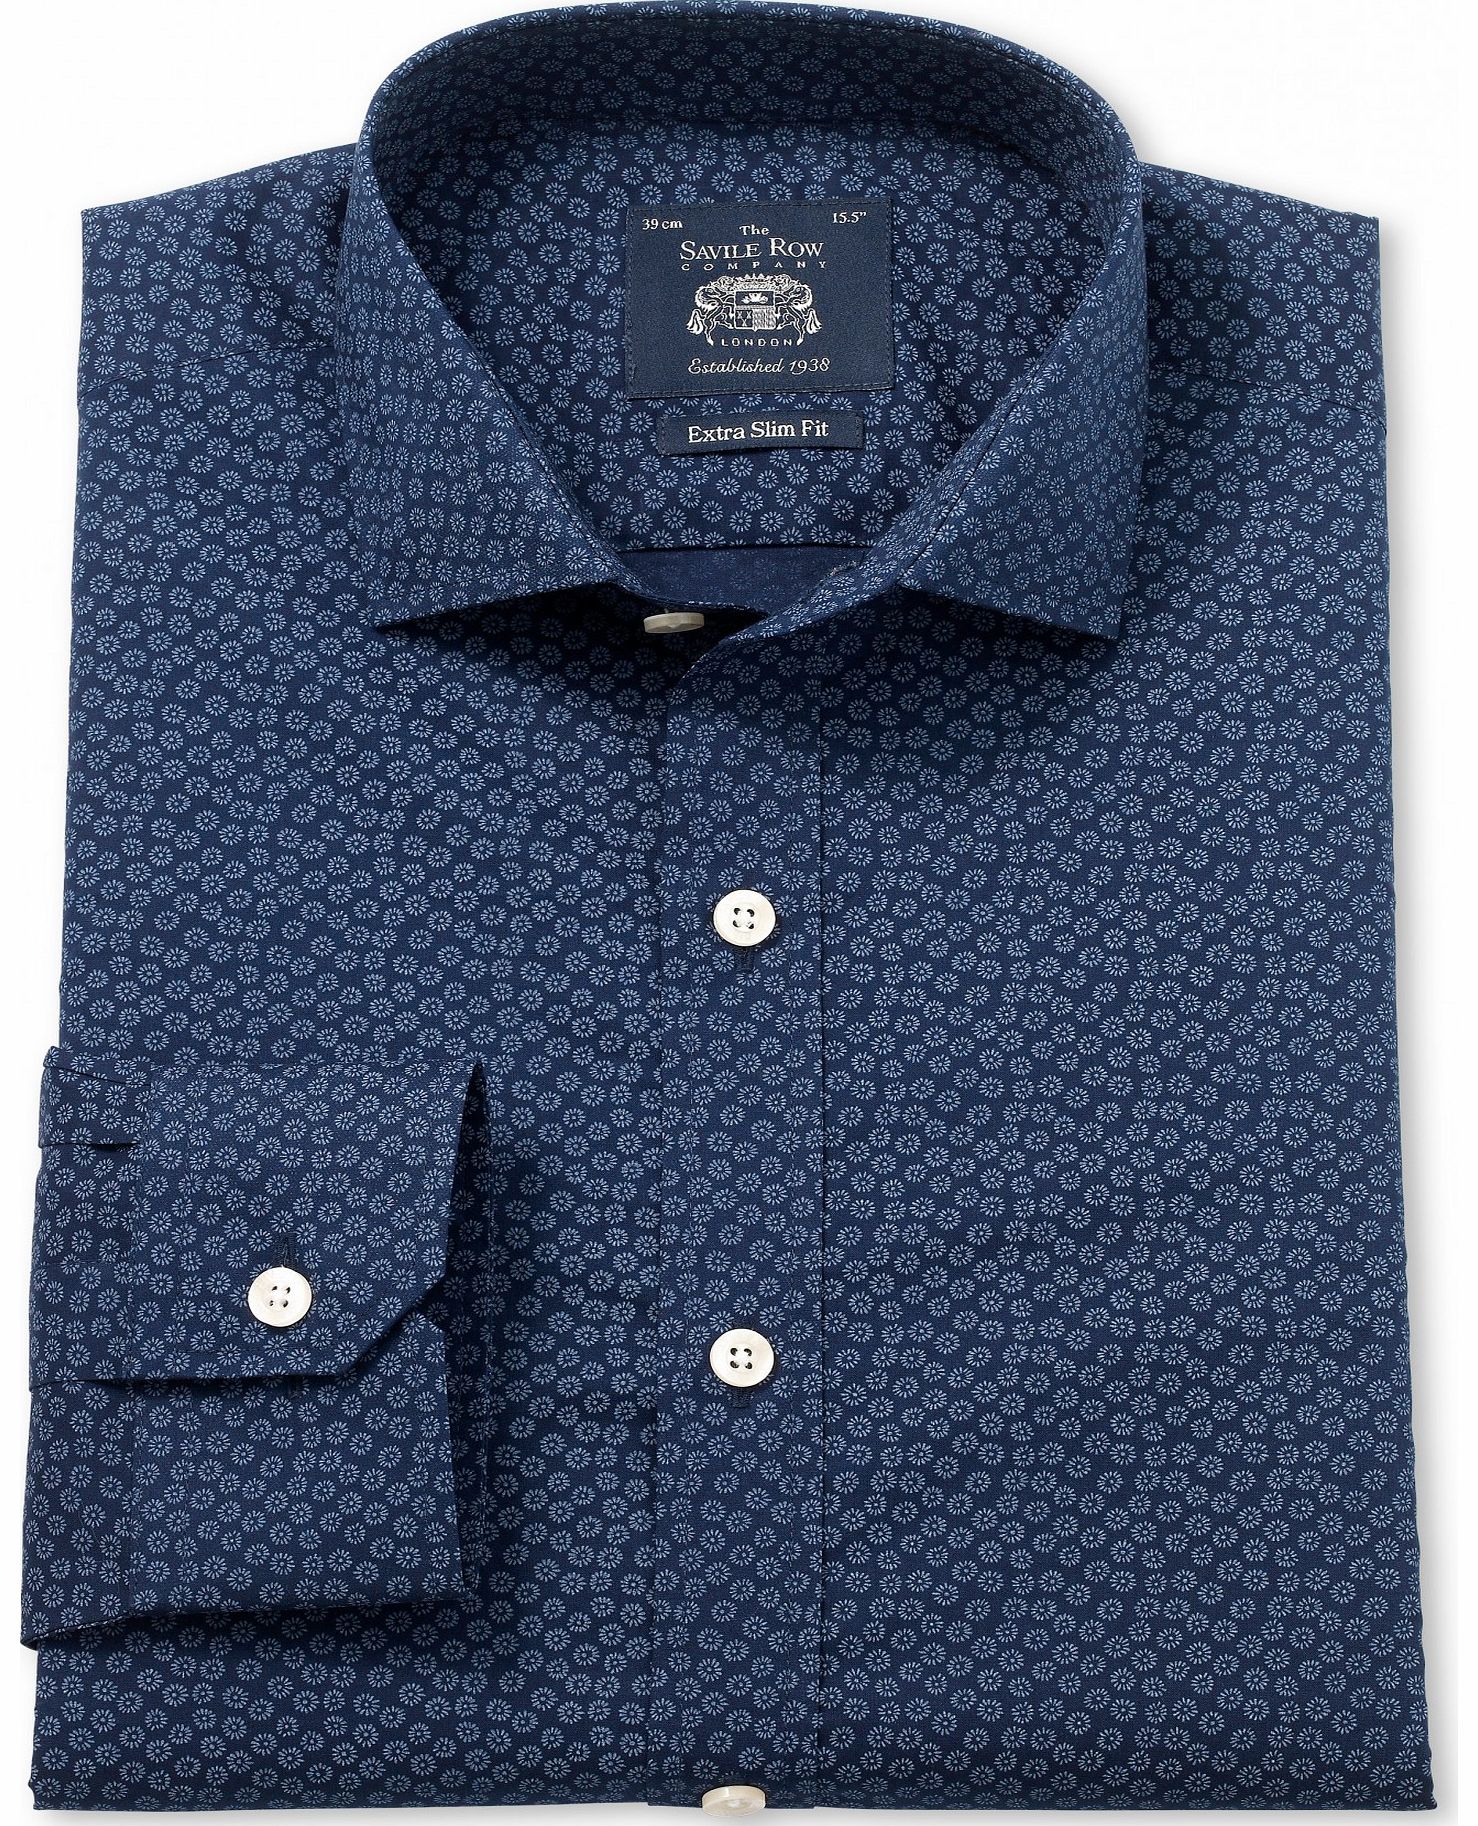 Navy Blue Printed Extra Slim Fit Shirt 17``